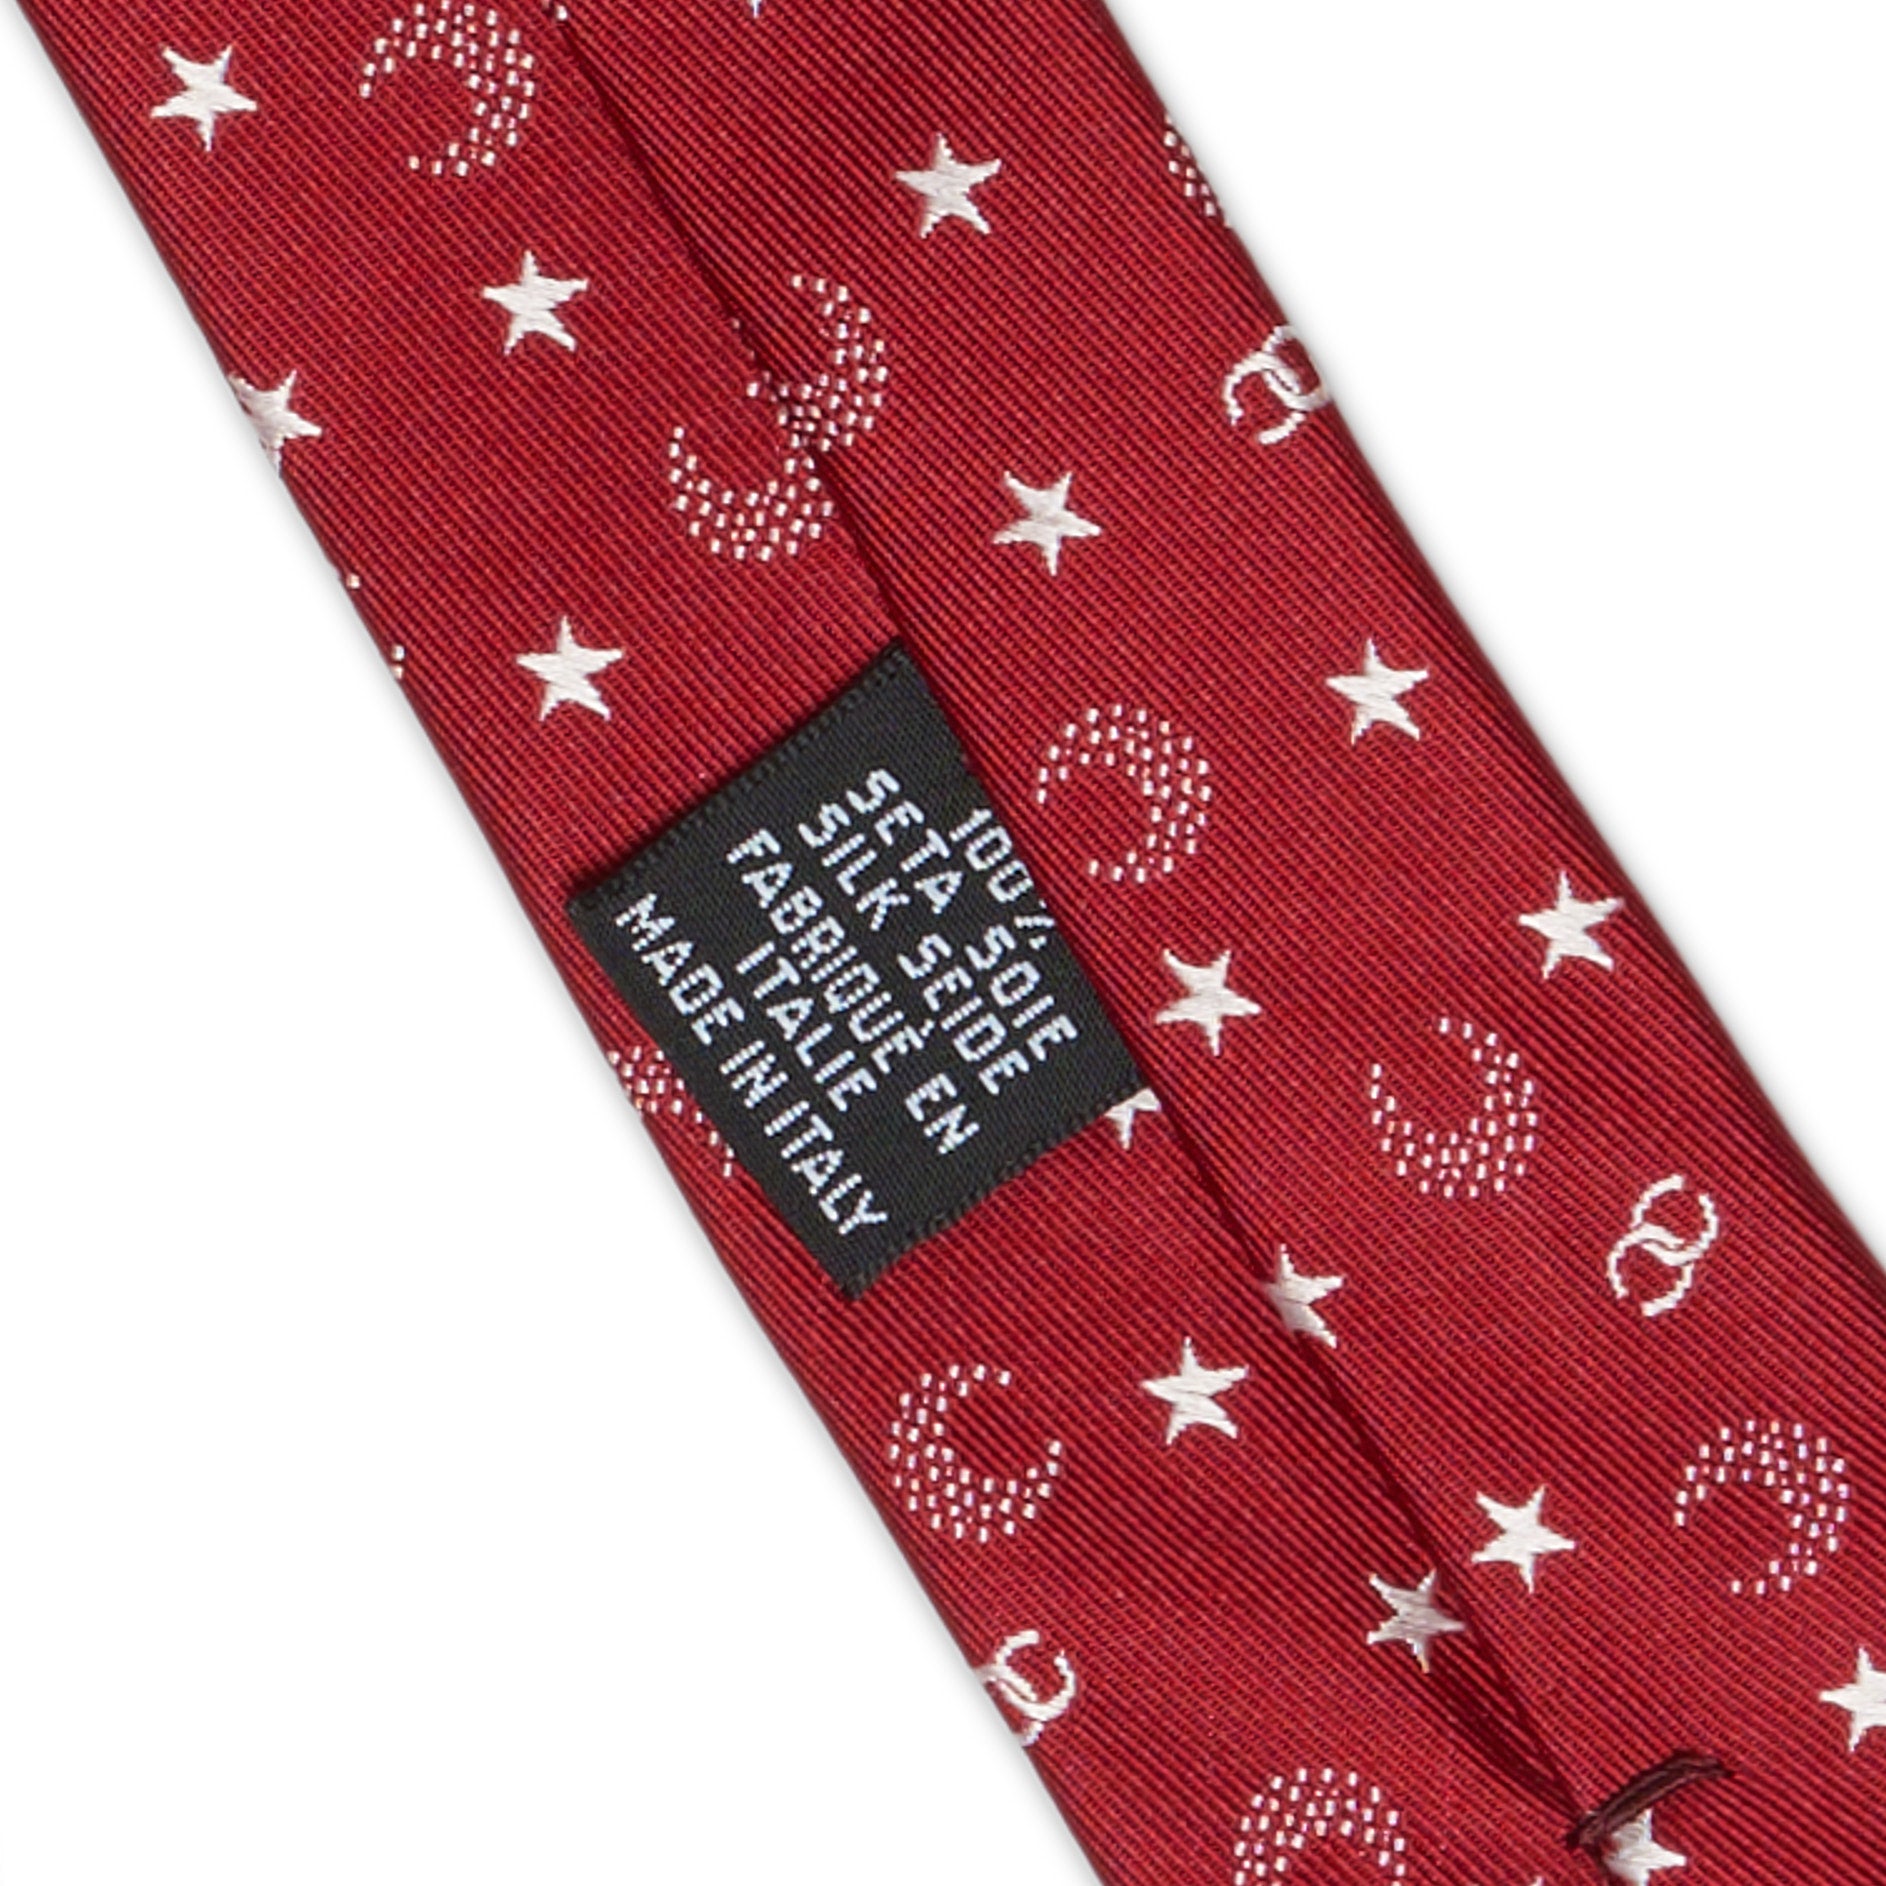 CHANEL PARIS Handmade Red CC Logo Moon Star Design Silk Tie